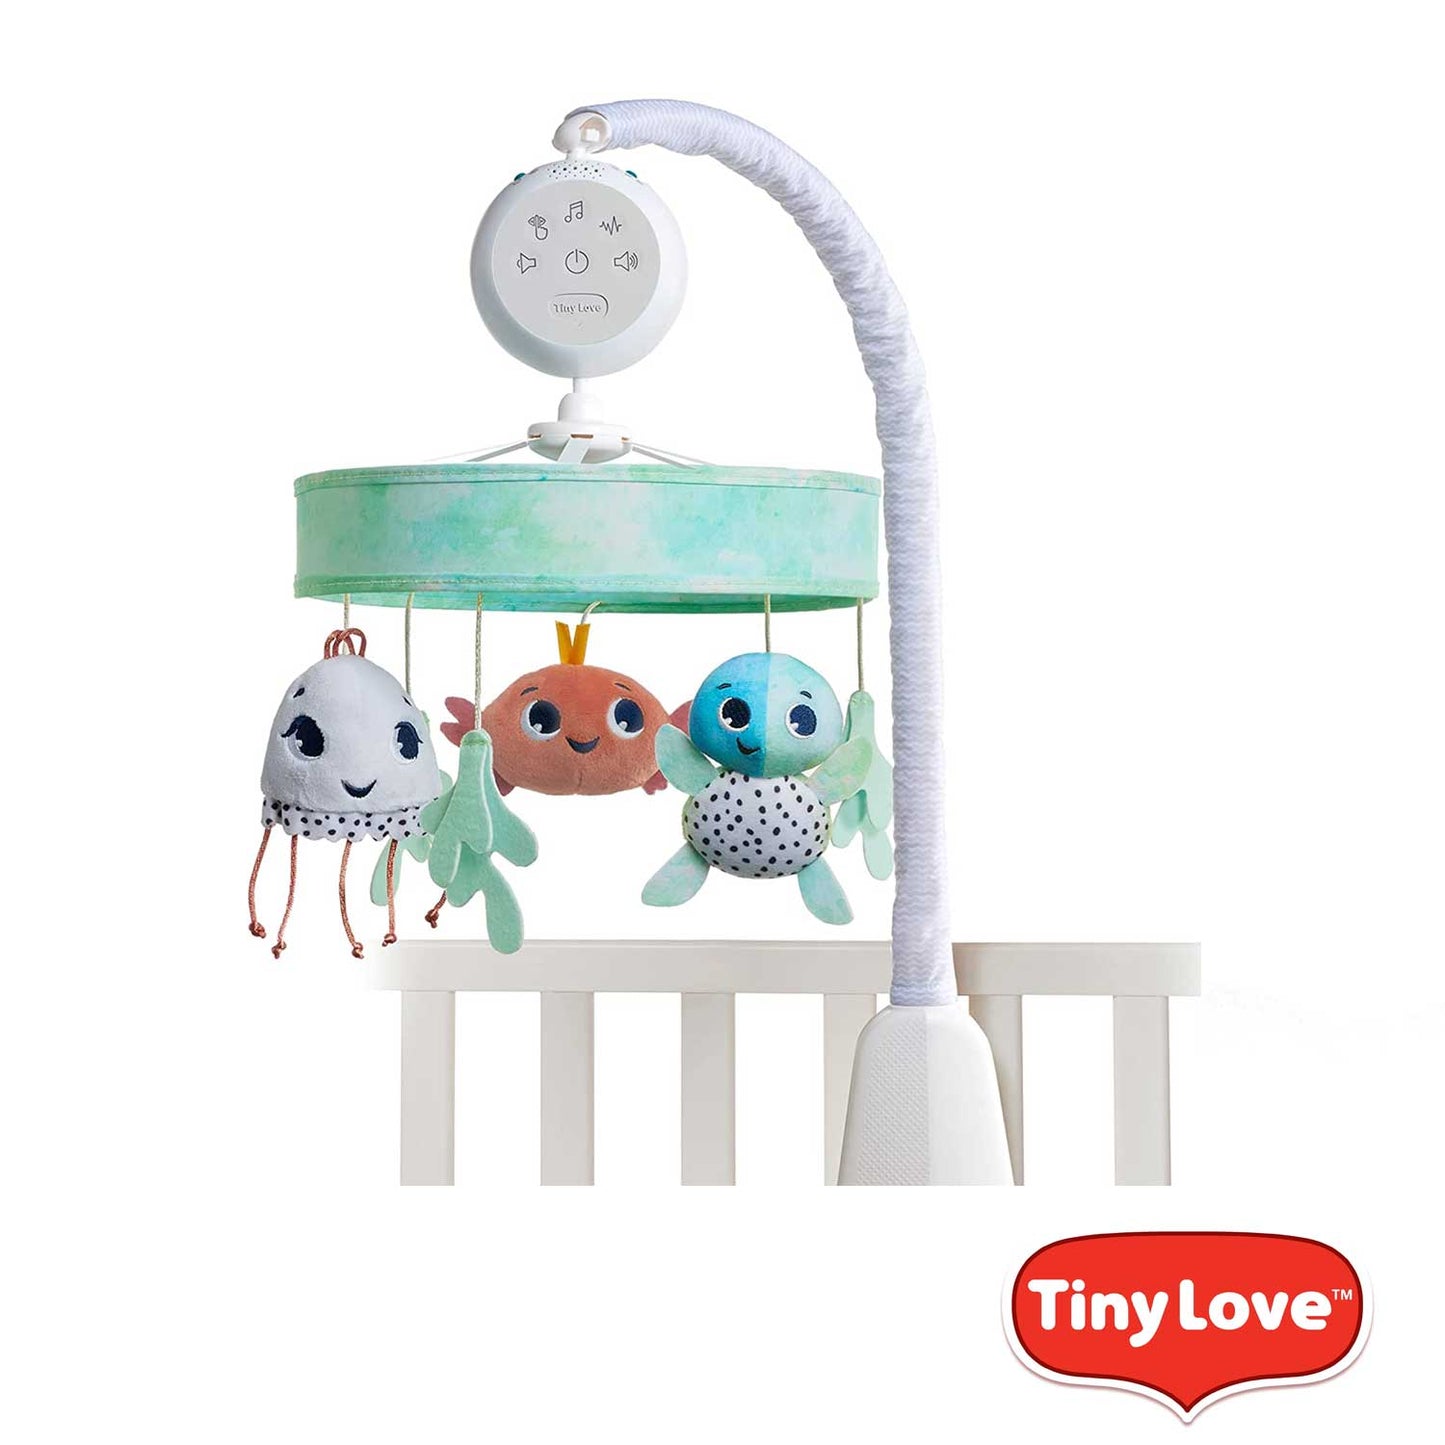 Tiny Love - The Underwater World Baby cradle mobile Treasure the Ocean